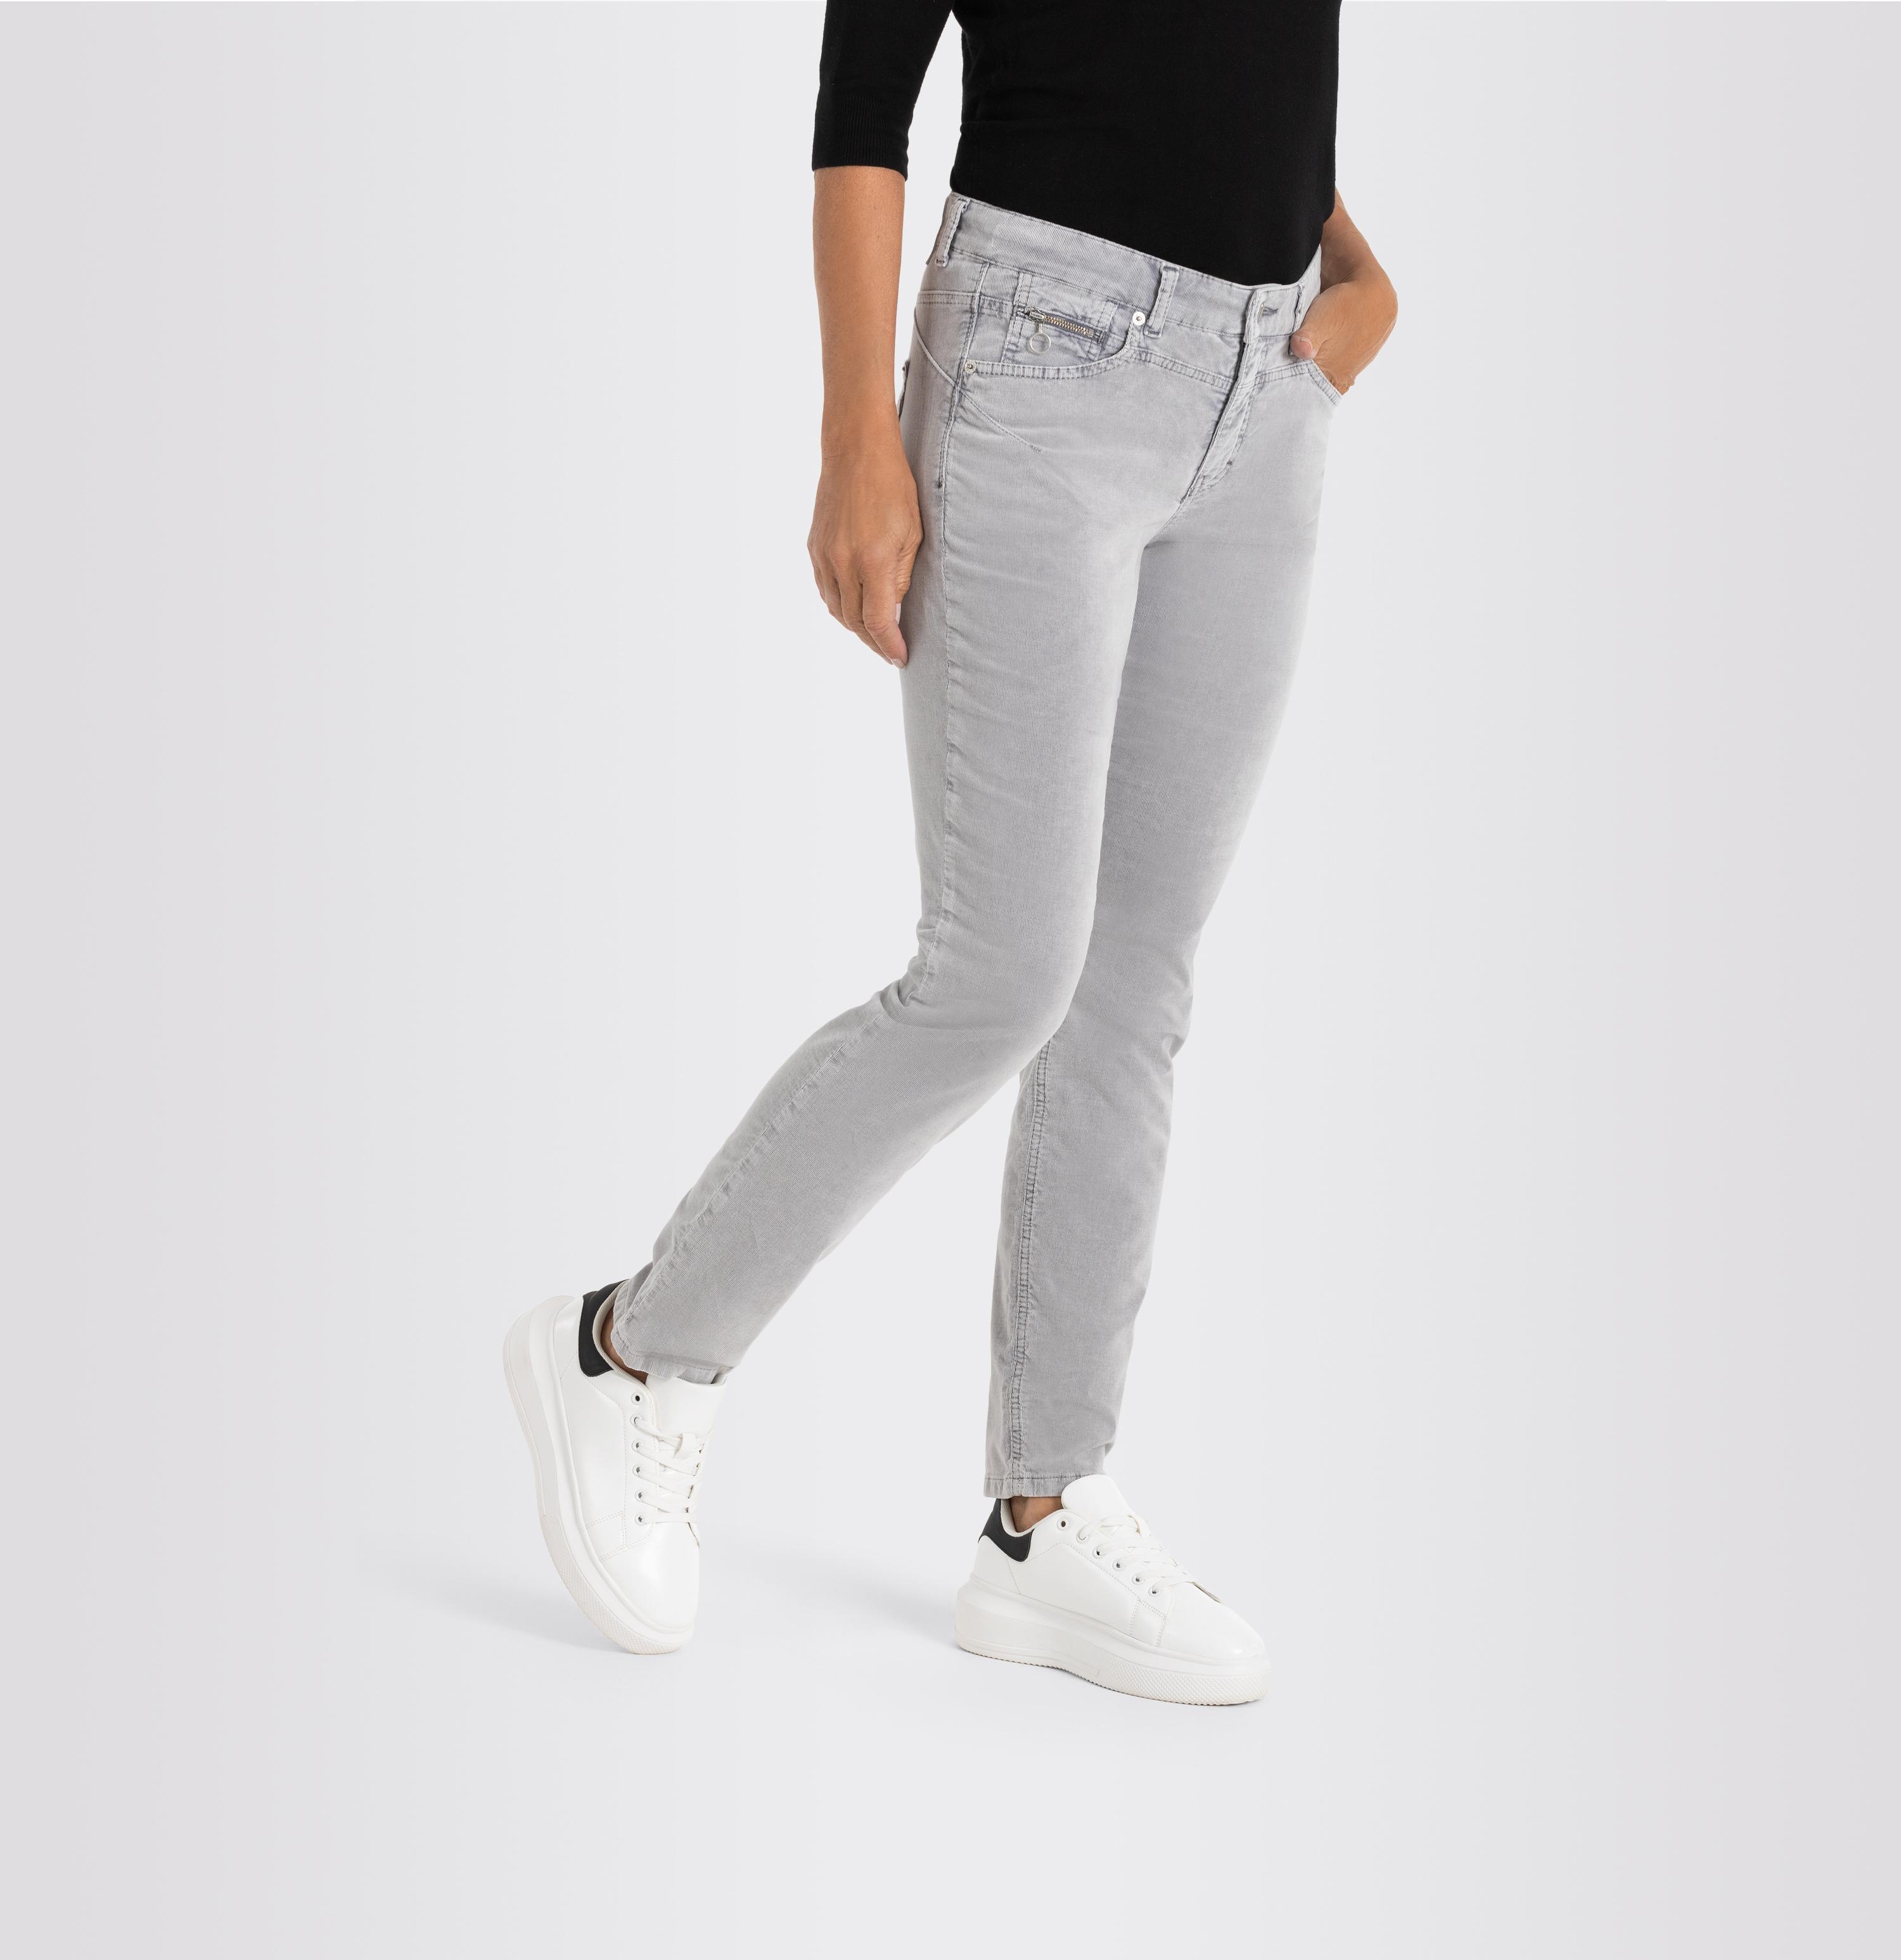 Damenhose, Rich Slim, Baby Shop Jeans 051V grau Soft, MAC 